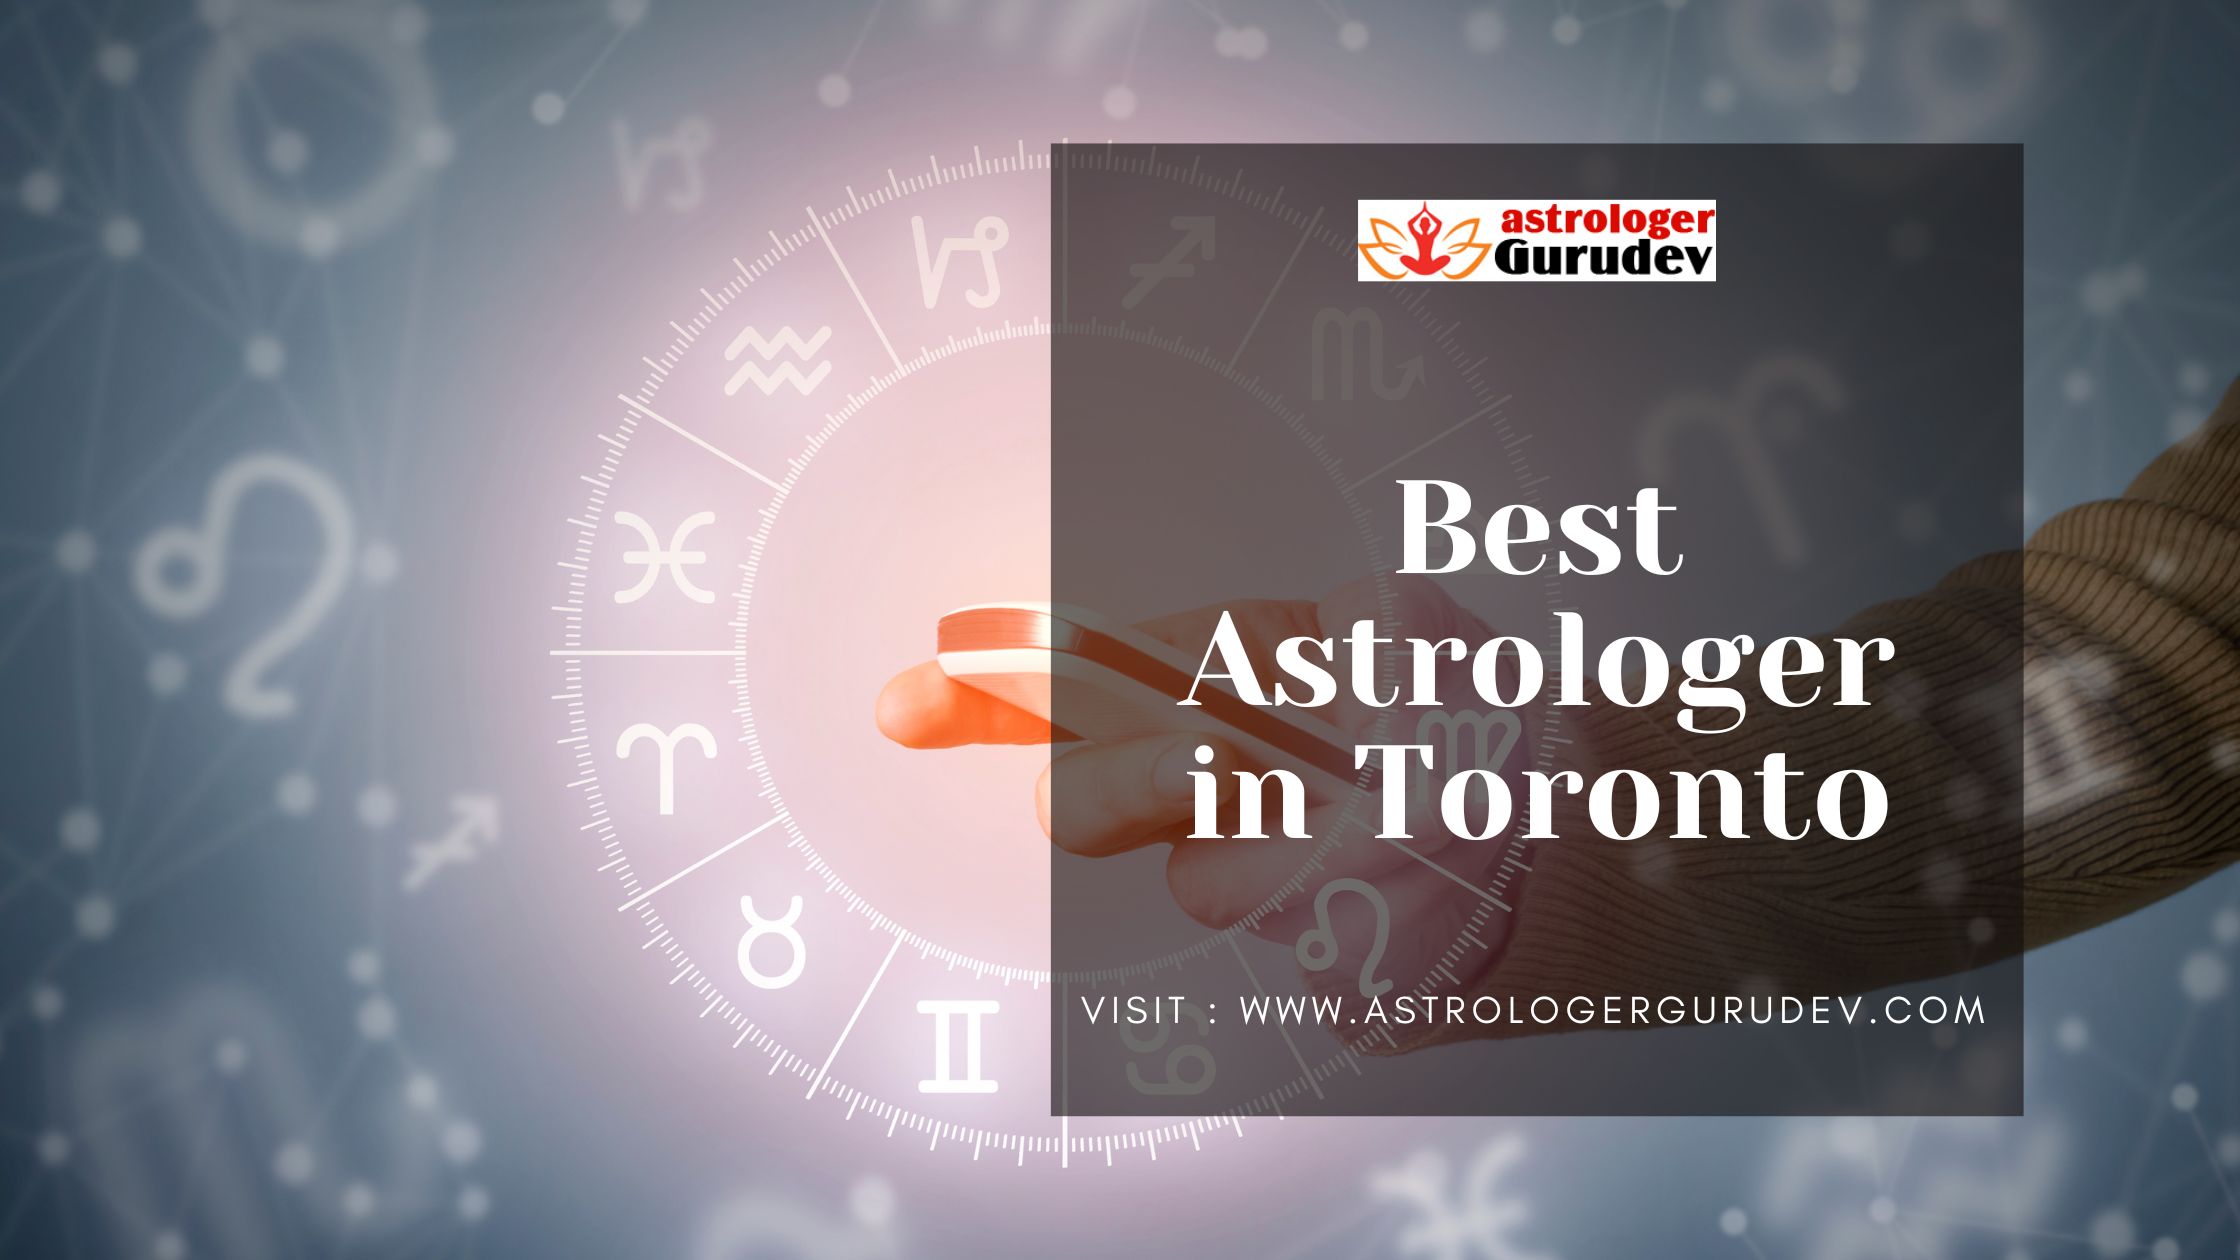 Astrologer in Toronto, Canada - Astrologer Gurudev-3e5884f5